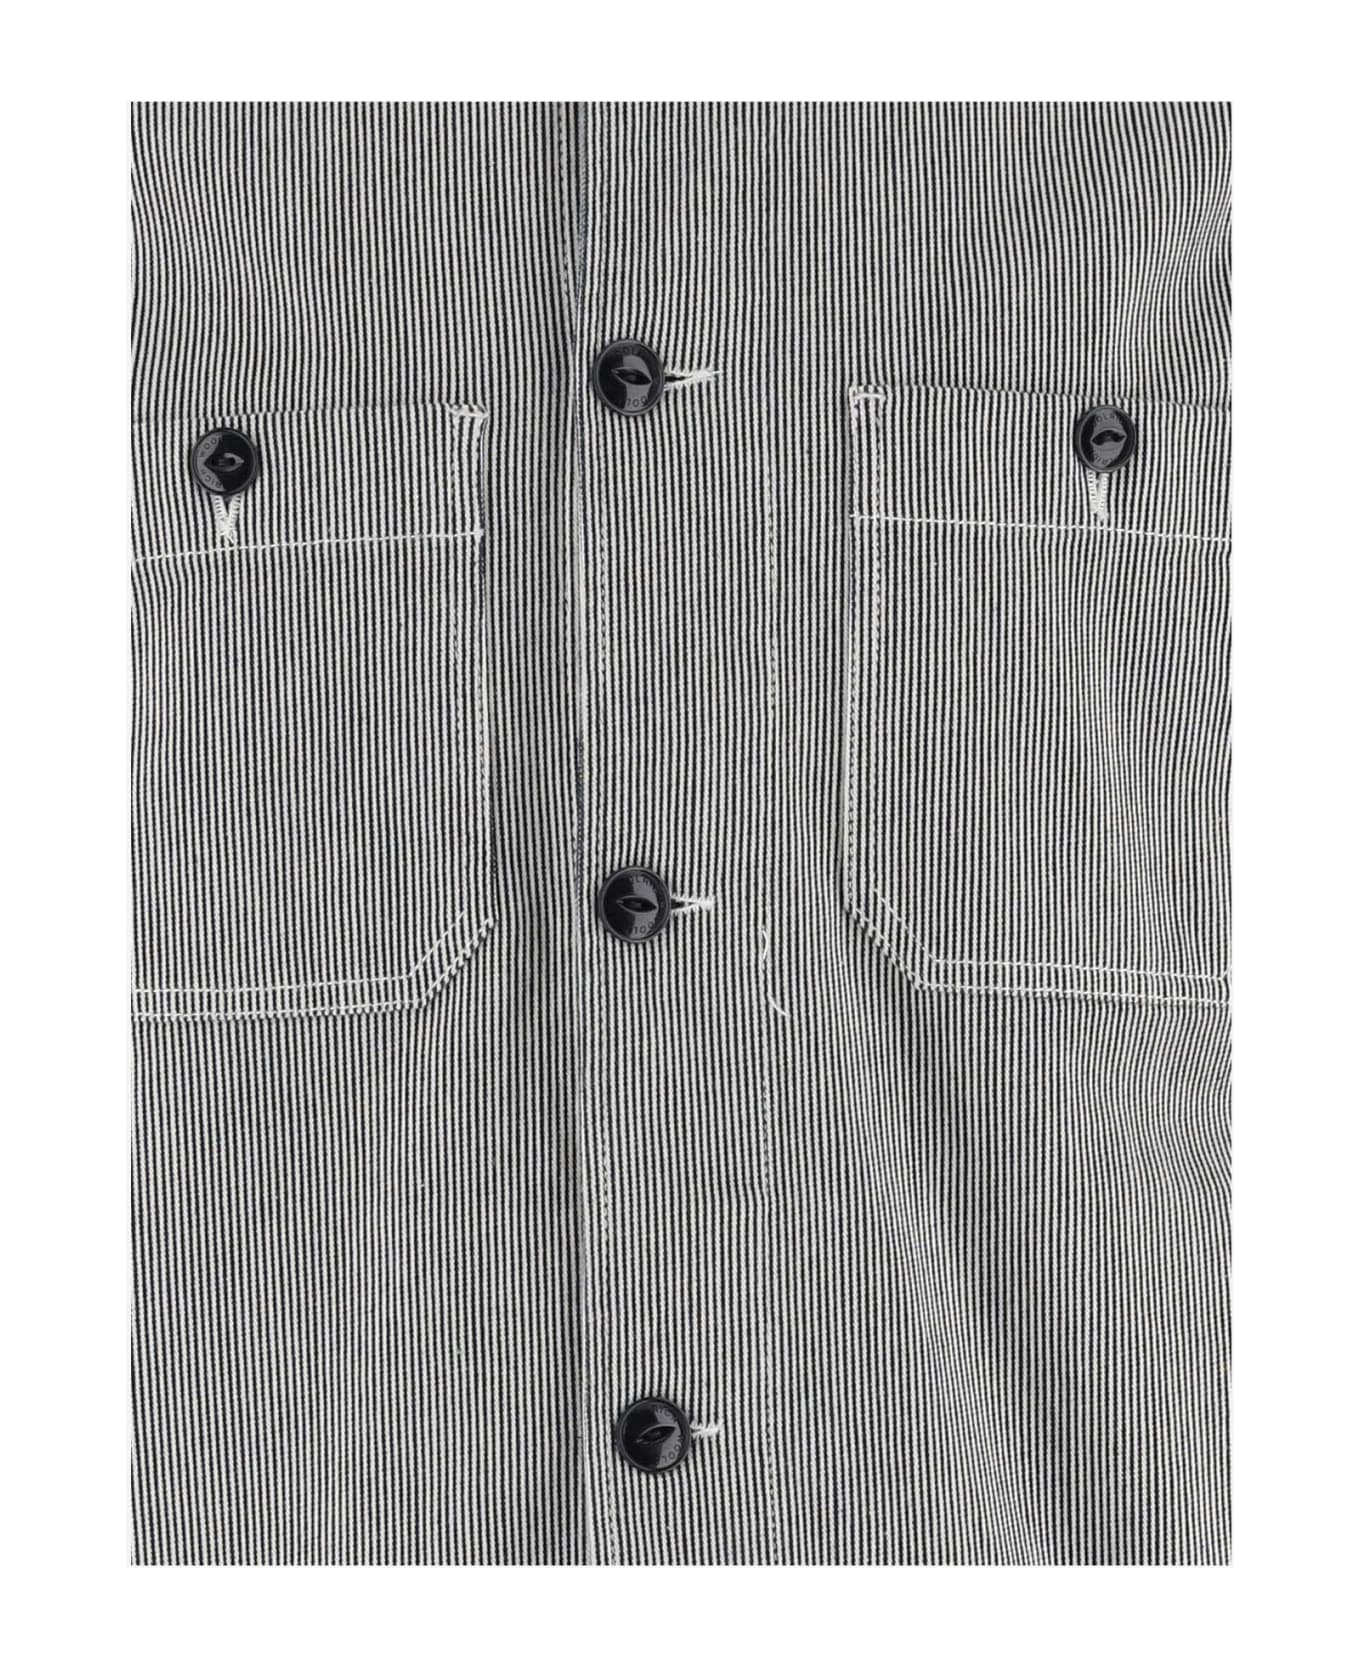 Woolrich Striped Cotton Shirt - Grey